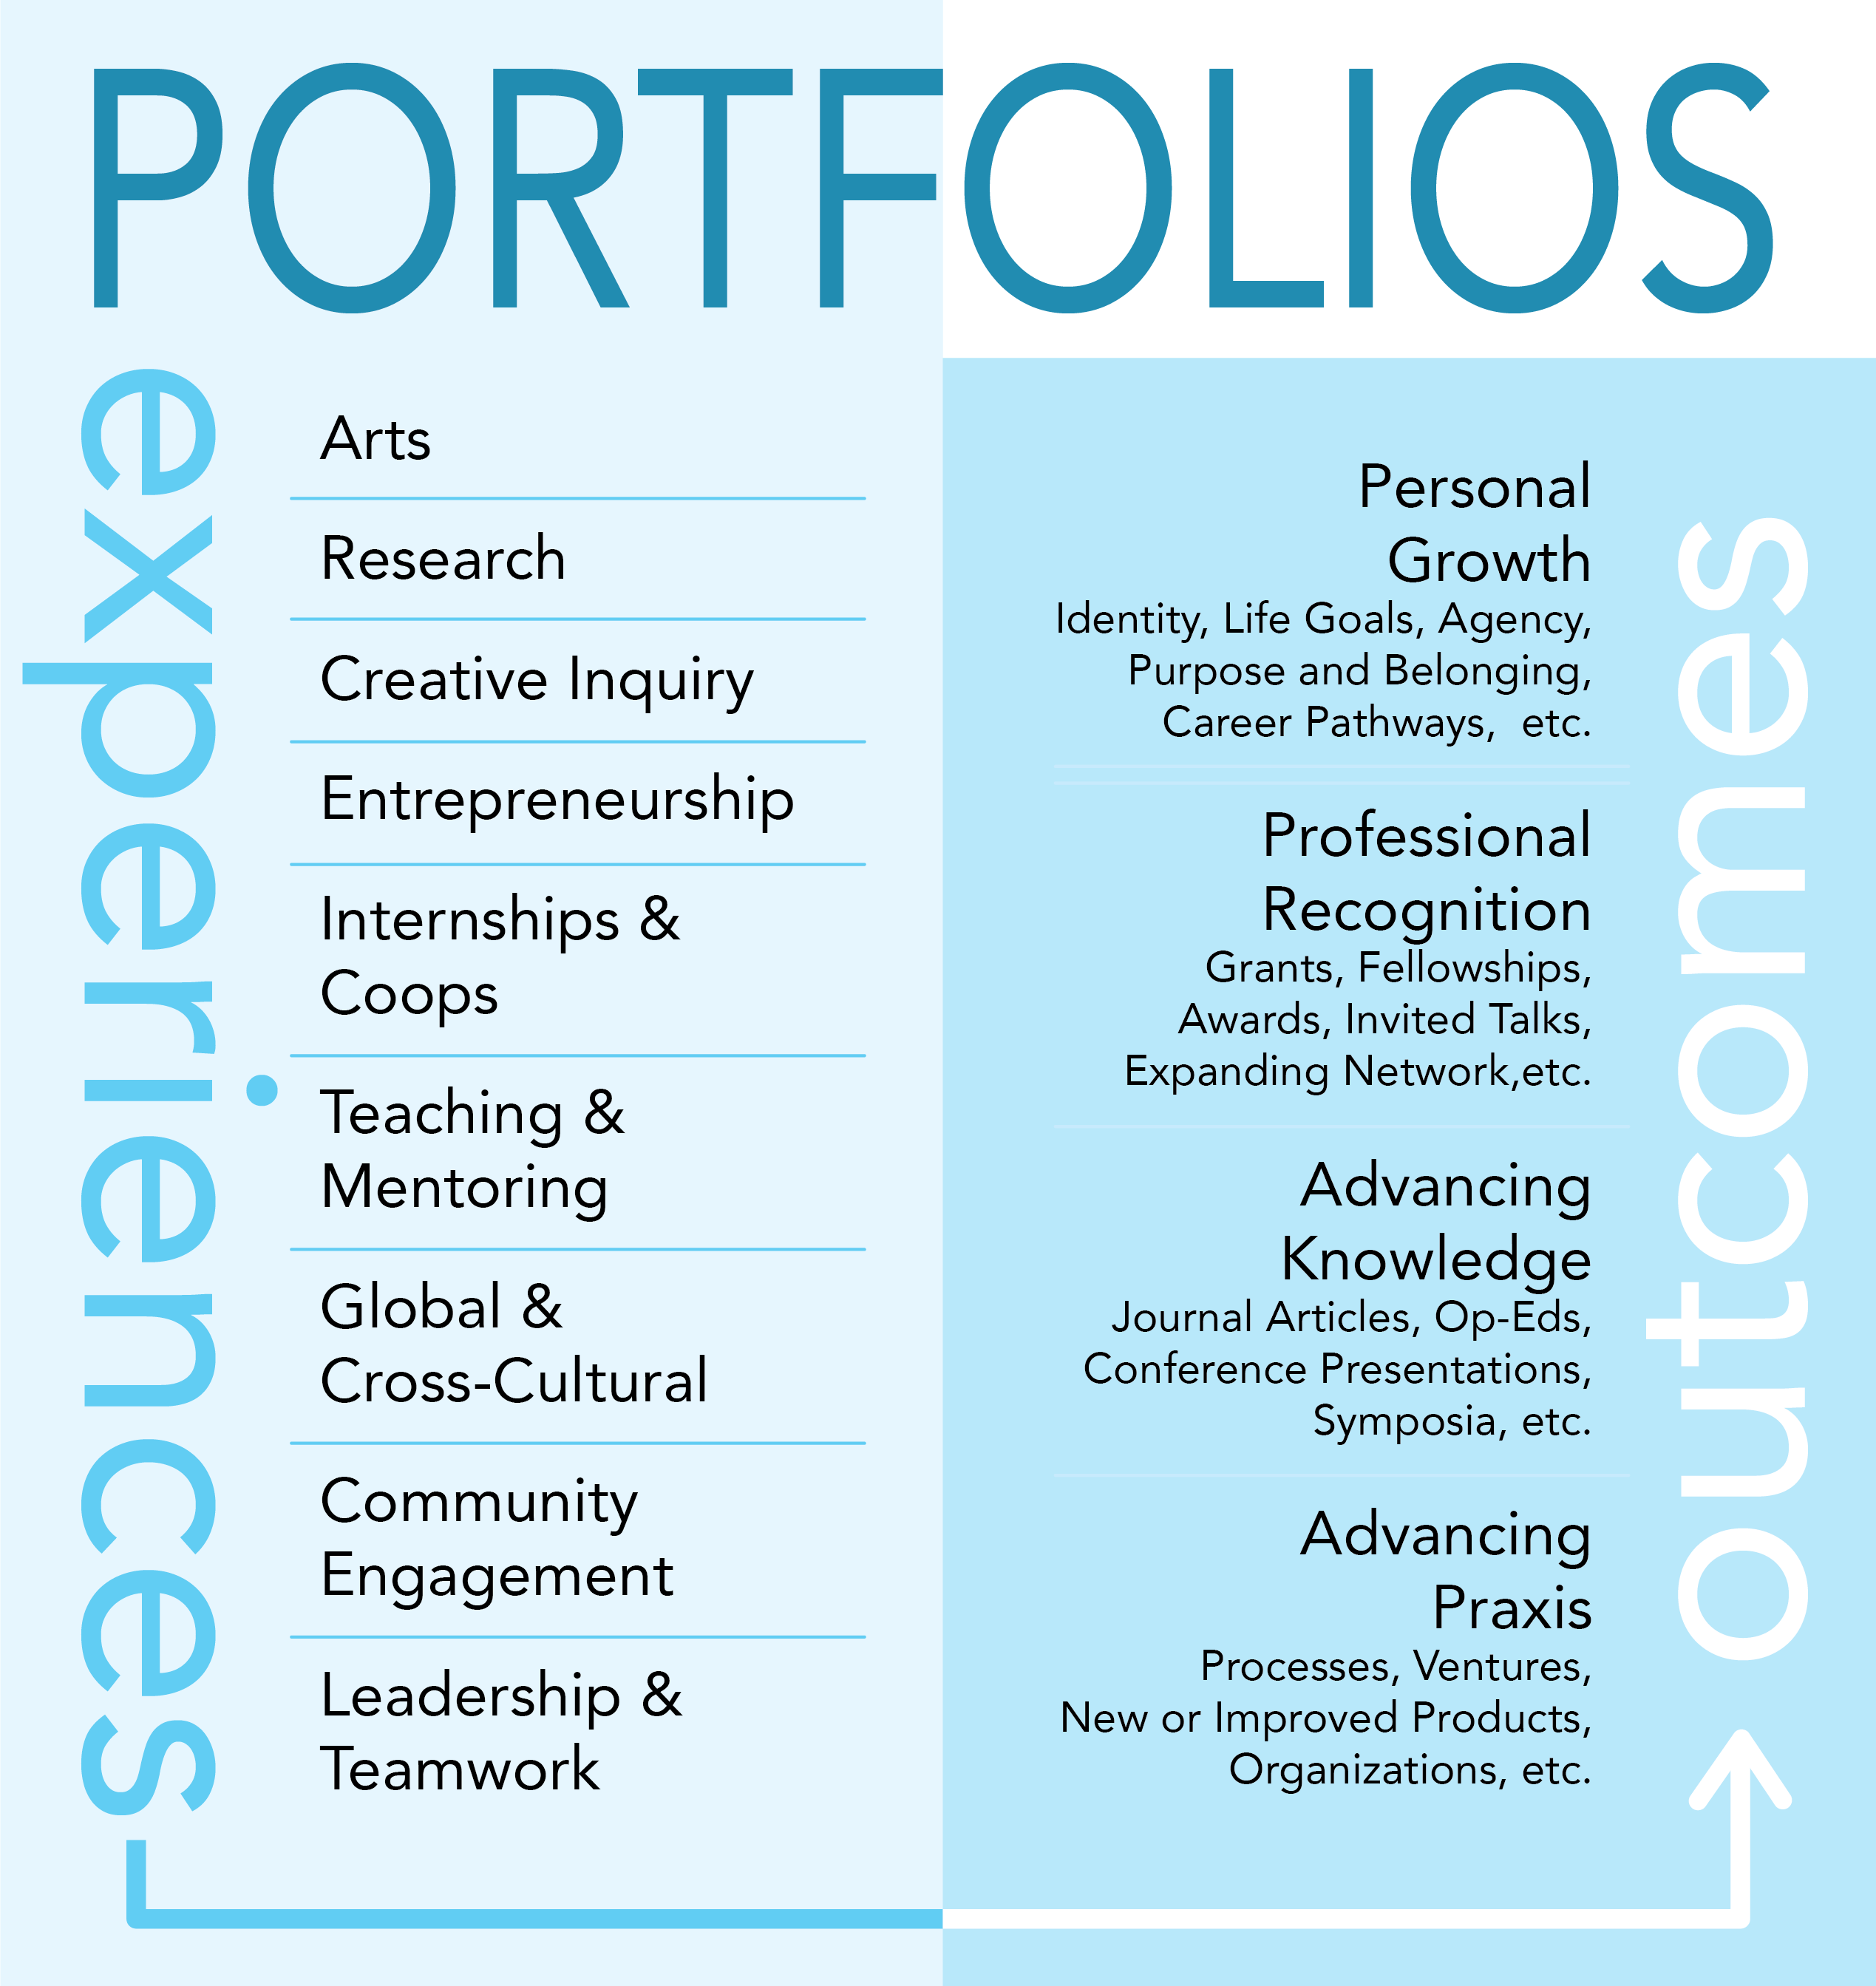 Values-Based Student Portfolios